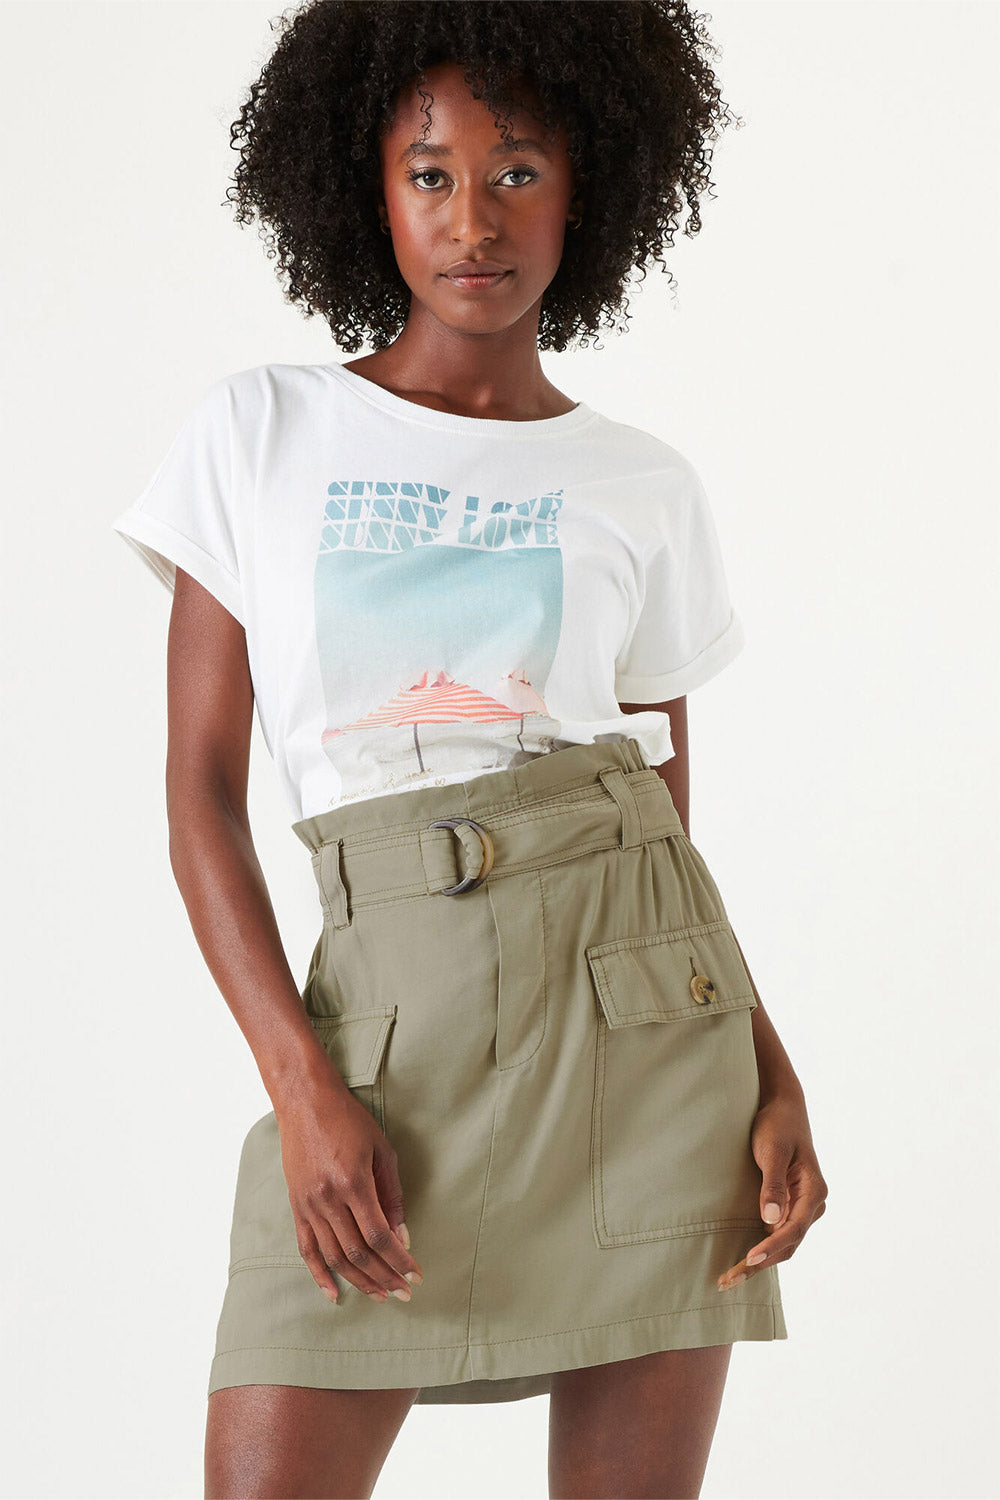 Garcia (Q40008) Women's Sunny Love Cap Sleeve Graphic T-shirt